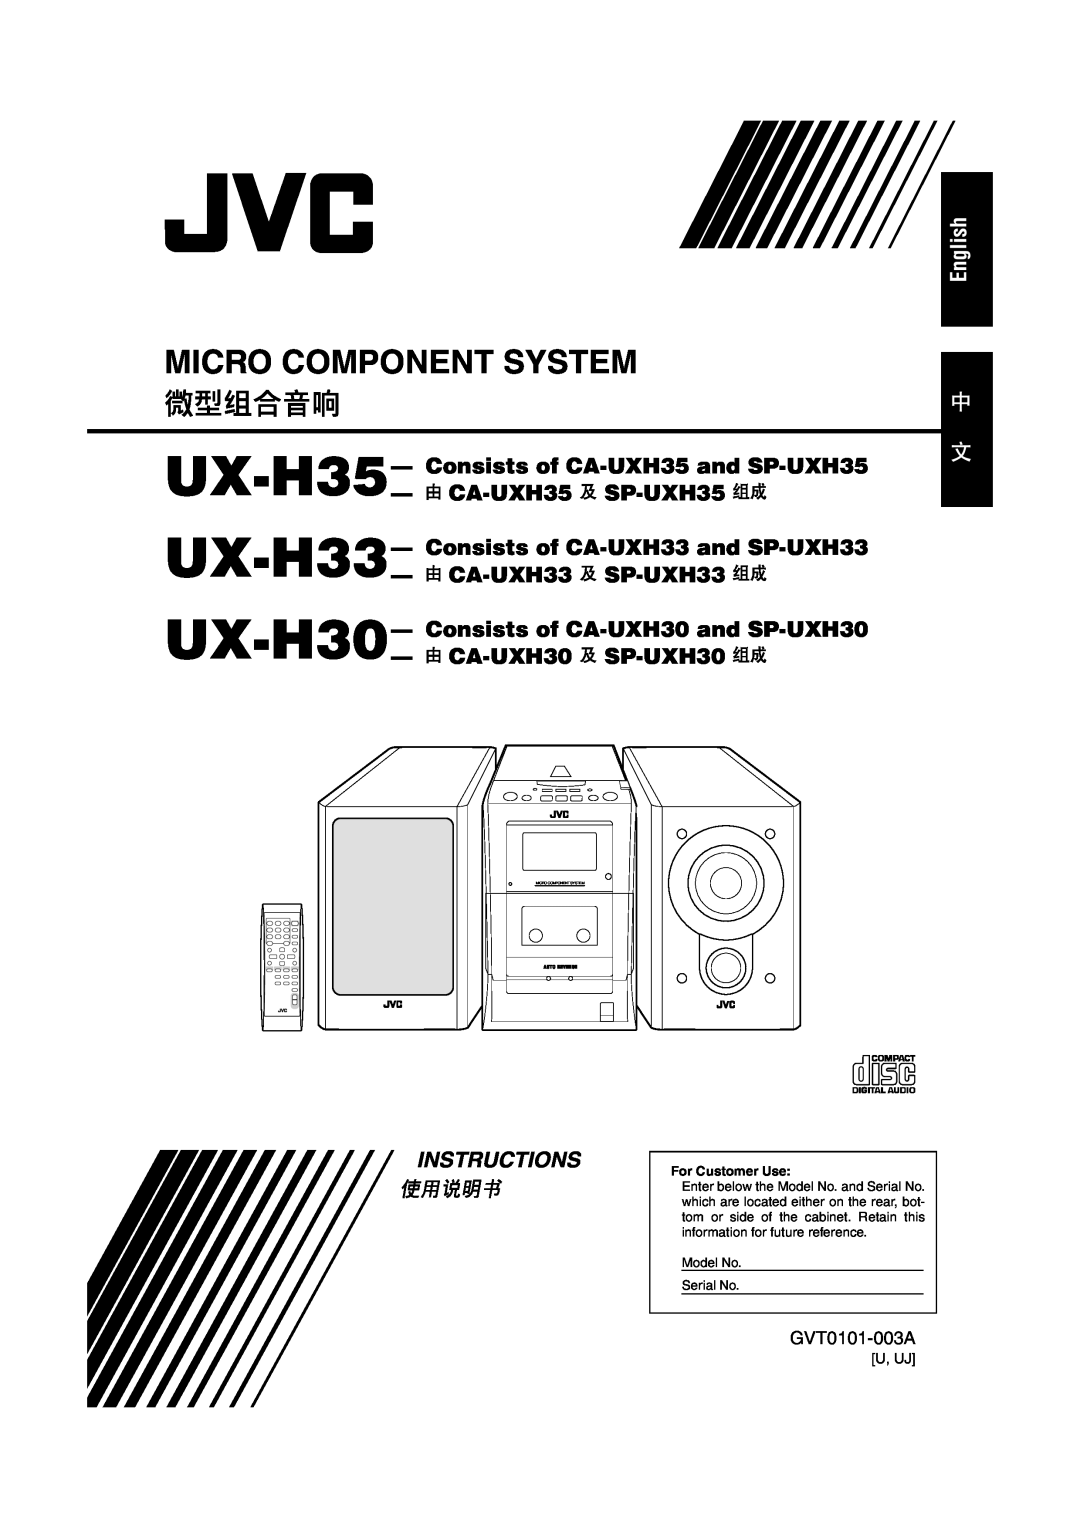 JVC UX-H33 manual English, UX-H35-Consists of CA-UXH35and SP-UXH35, CA-UXH35 SP-UXH35, CA-UXH33 SP-UXH33, Instructions 